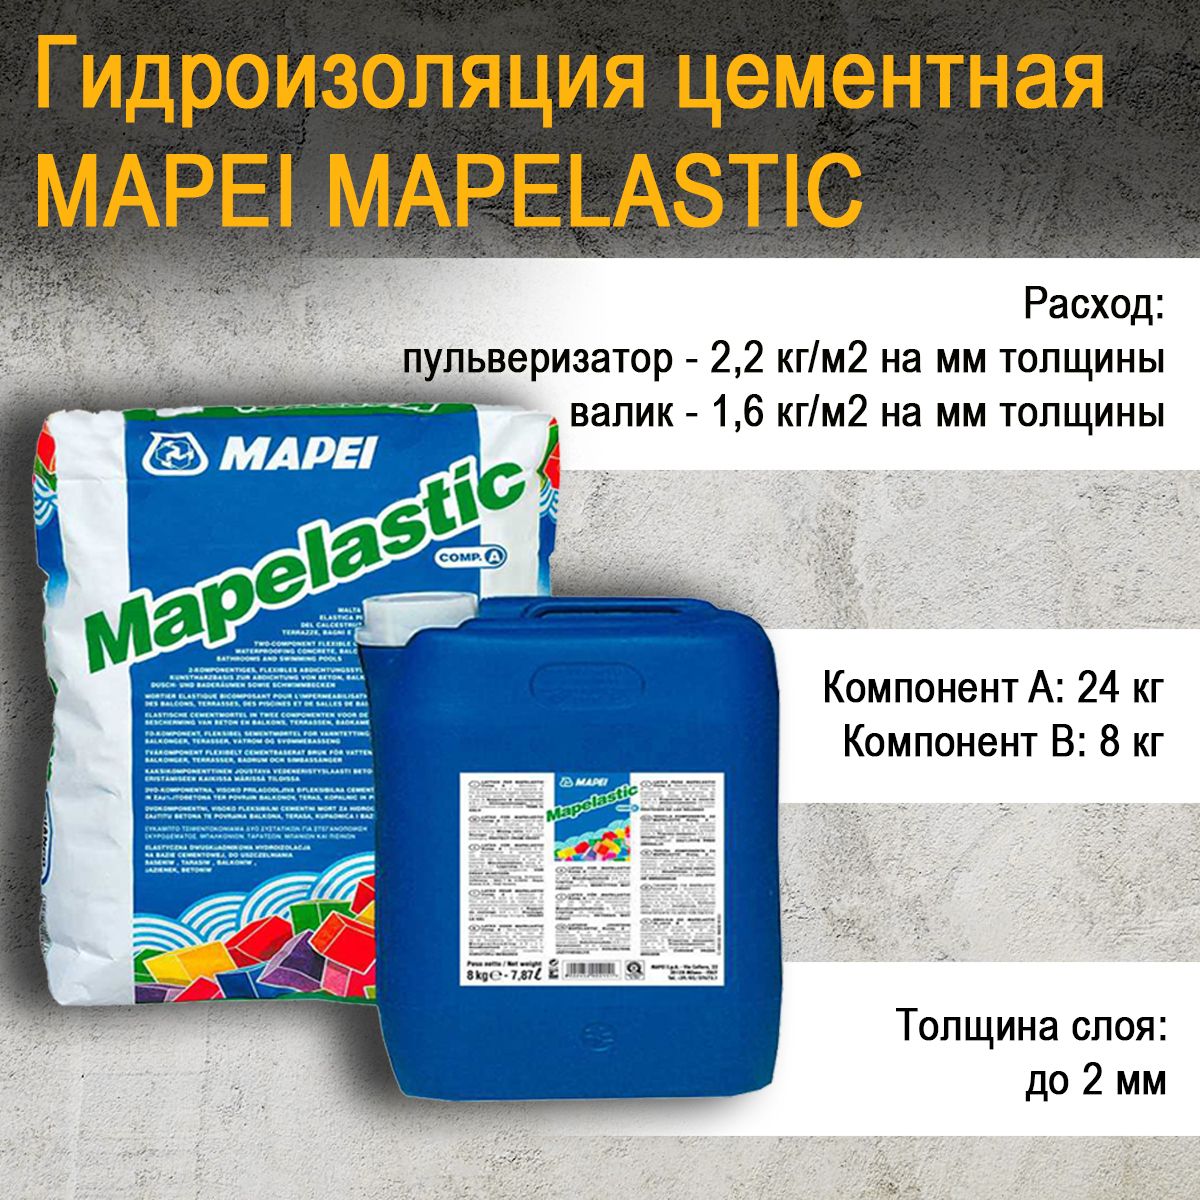 Гидроизоляция цементная Mapei Mapelastic двухкомпонентная комплект (а+б) 32 кг. Mapelastic комп. А+Б комплект 32 кг, эластичная гидроизоляция. Гидроизоляция Мапей двухкомпонентная. Мапеластик гидроизоляция